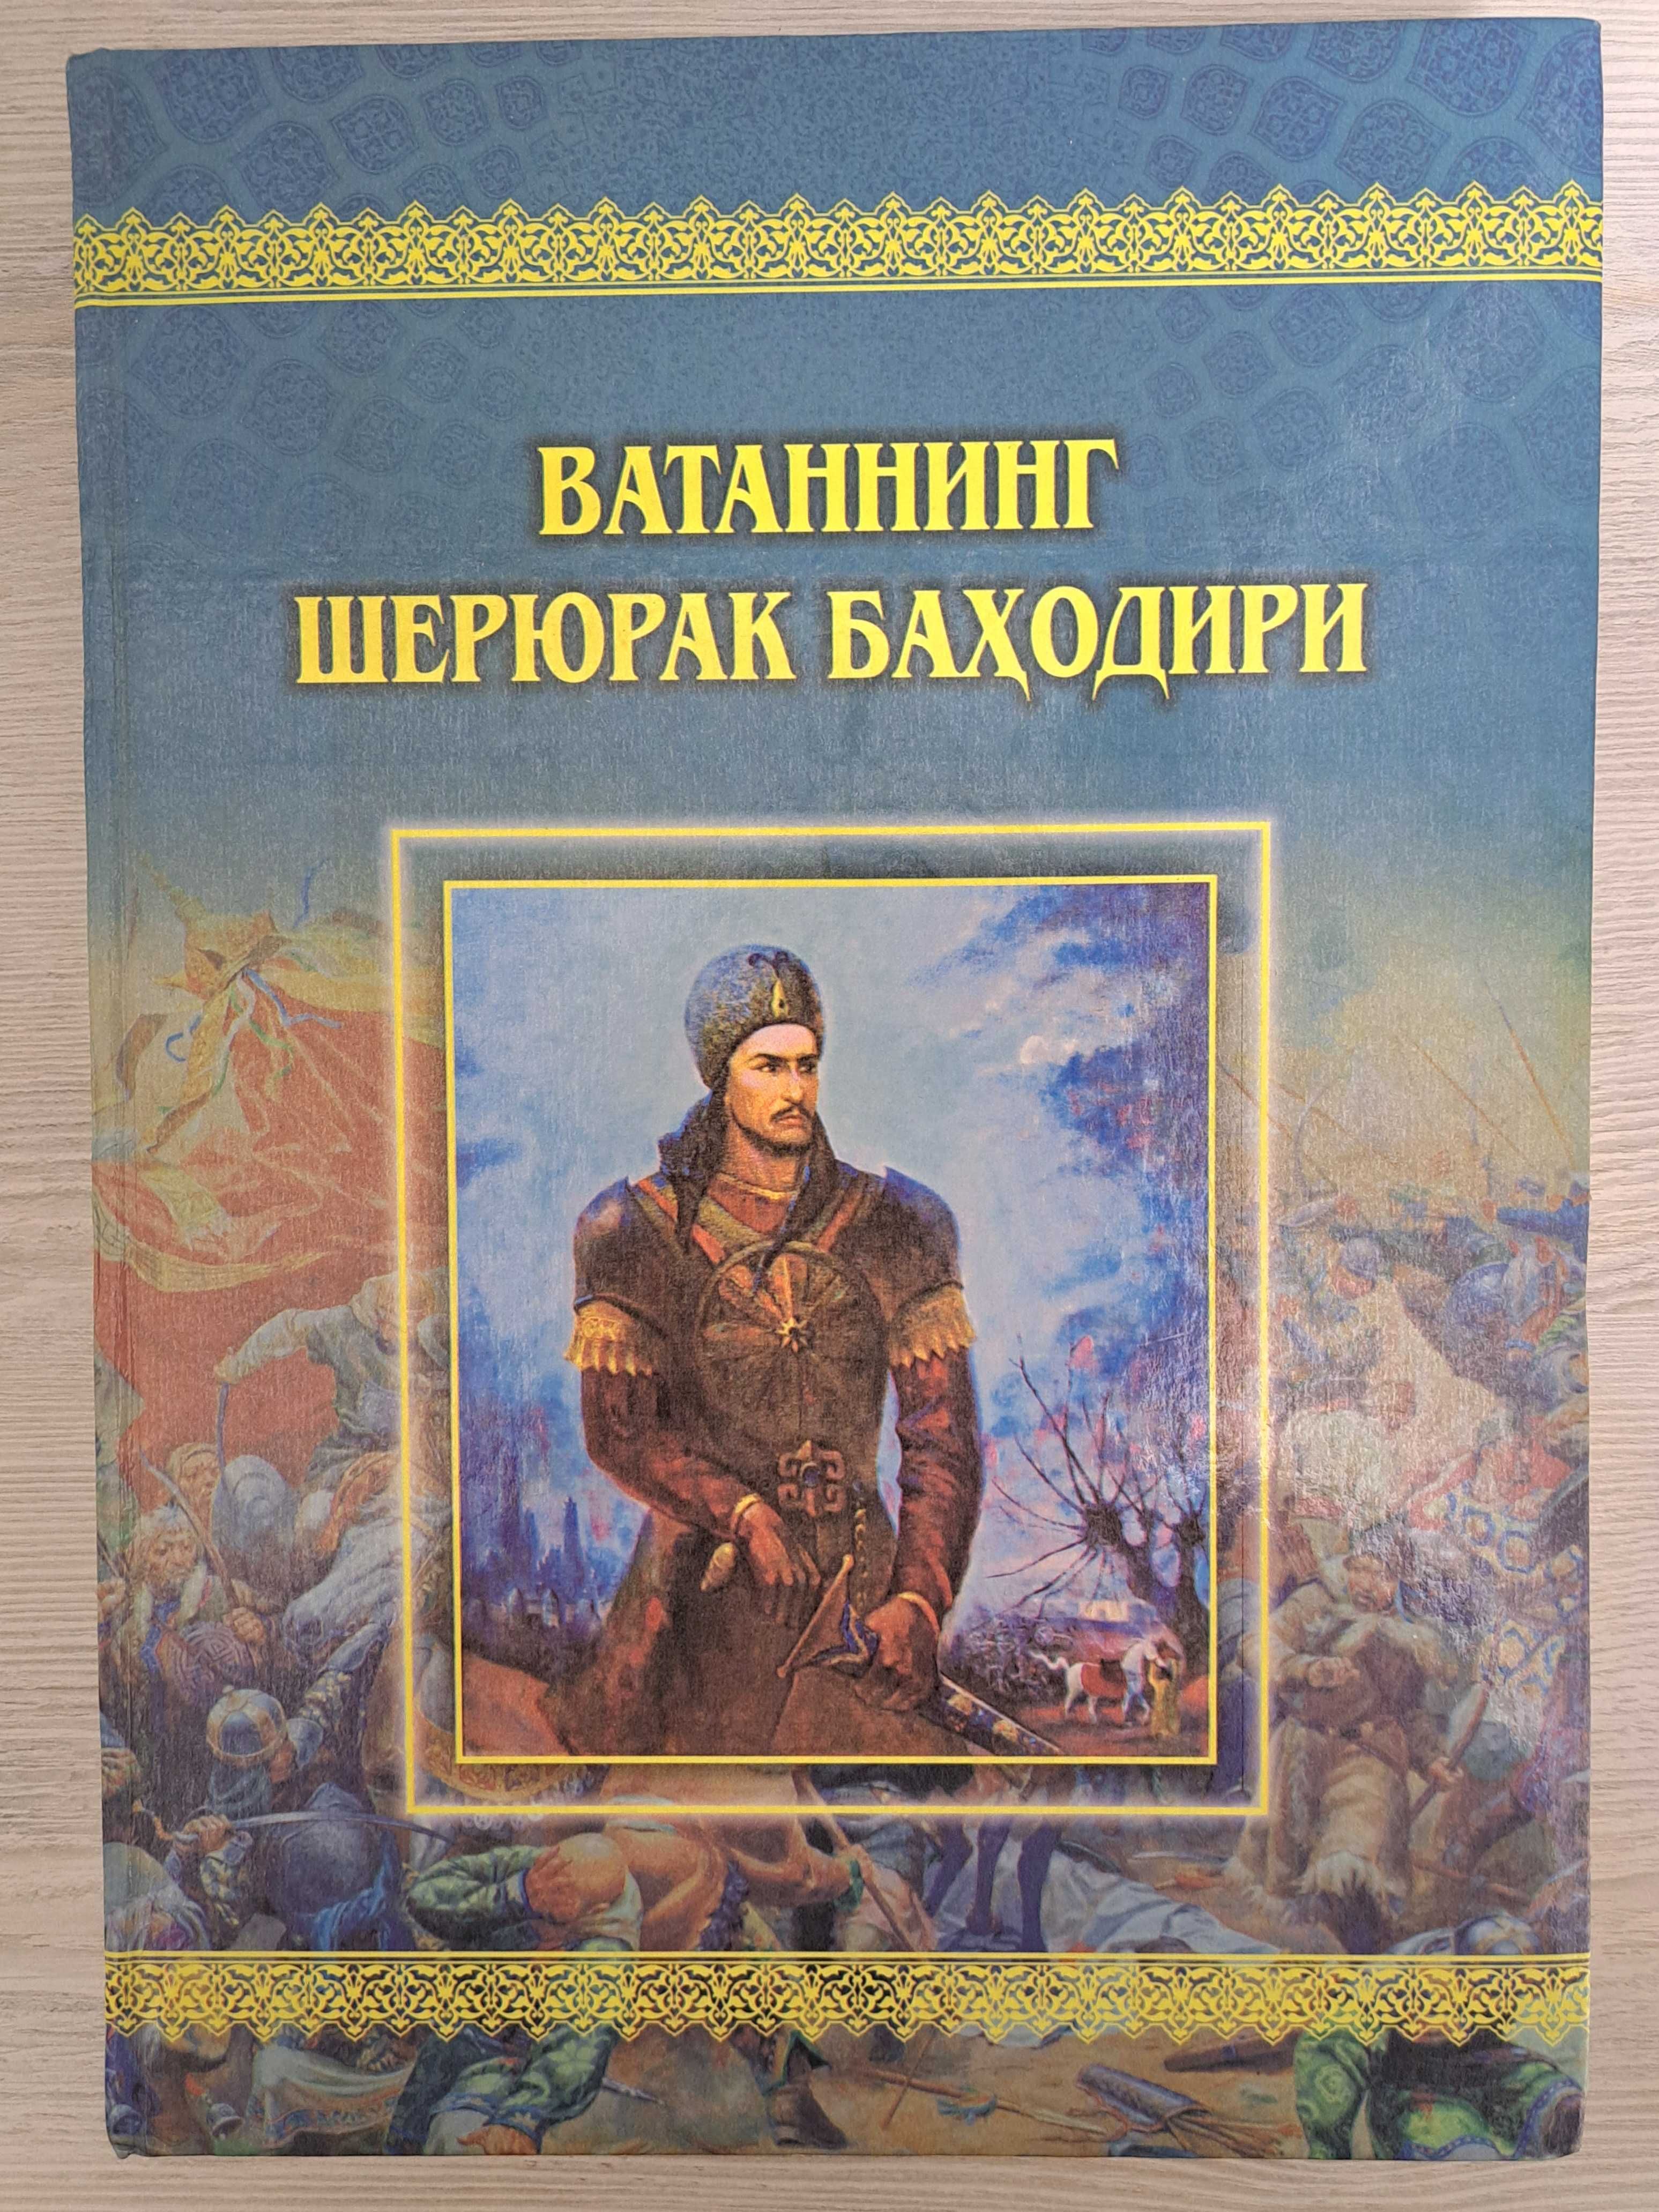 Книга "Vatanning sheryurak bahodiri" Жумабой Рахимов